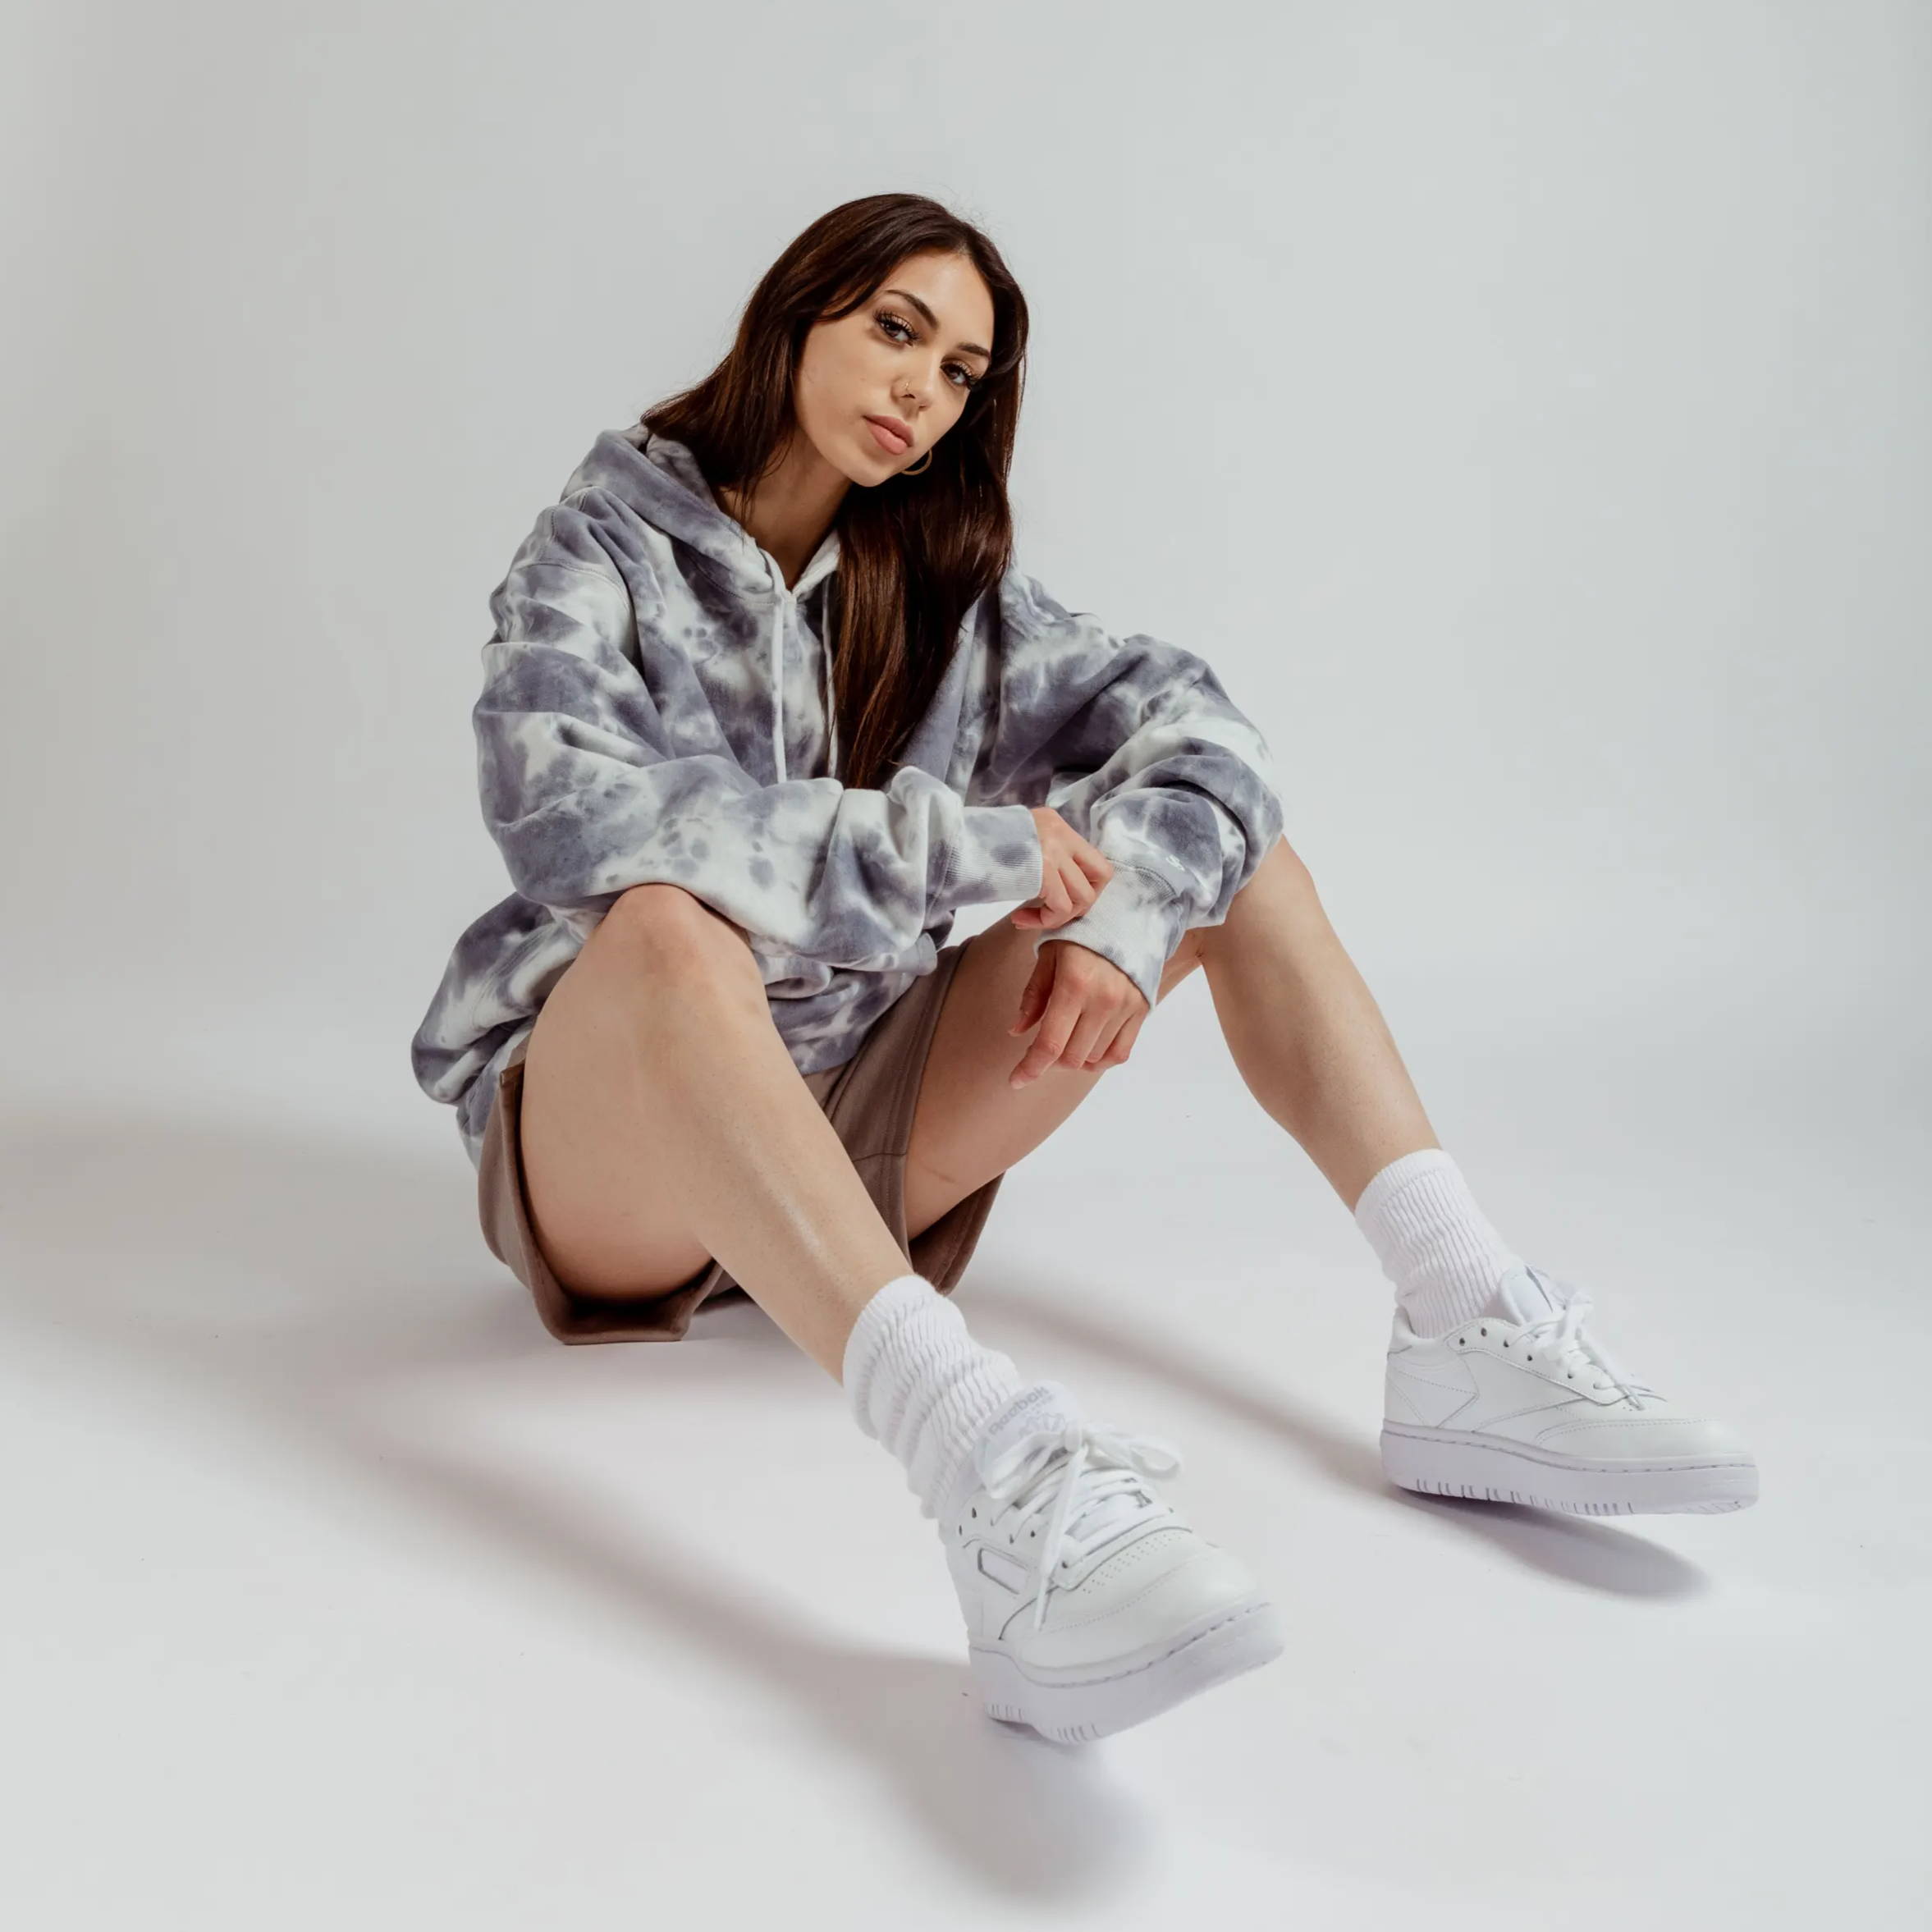 female model wearing gray hoodie and reebok shoes